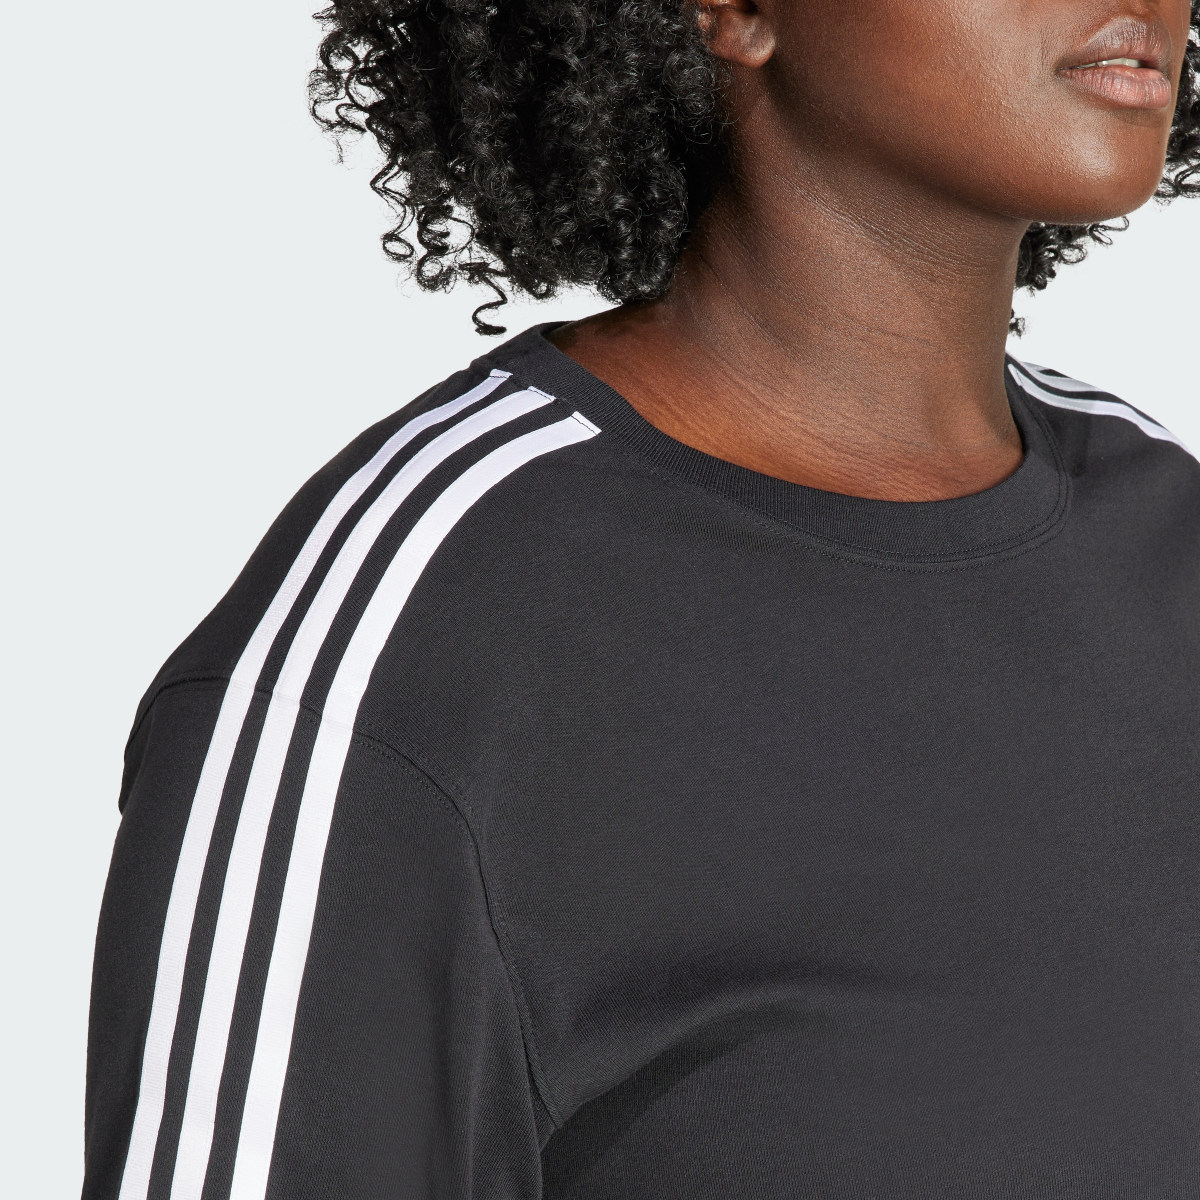 Adidas 3-Stripes Baby T-Shirt (Plus Size). 7